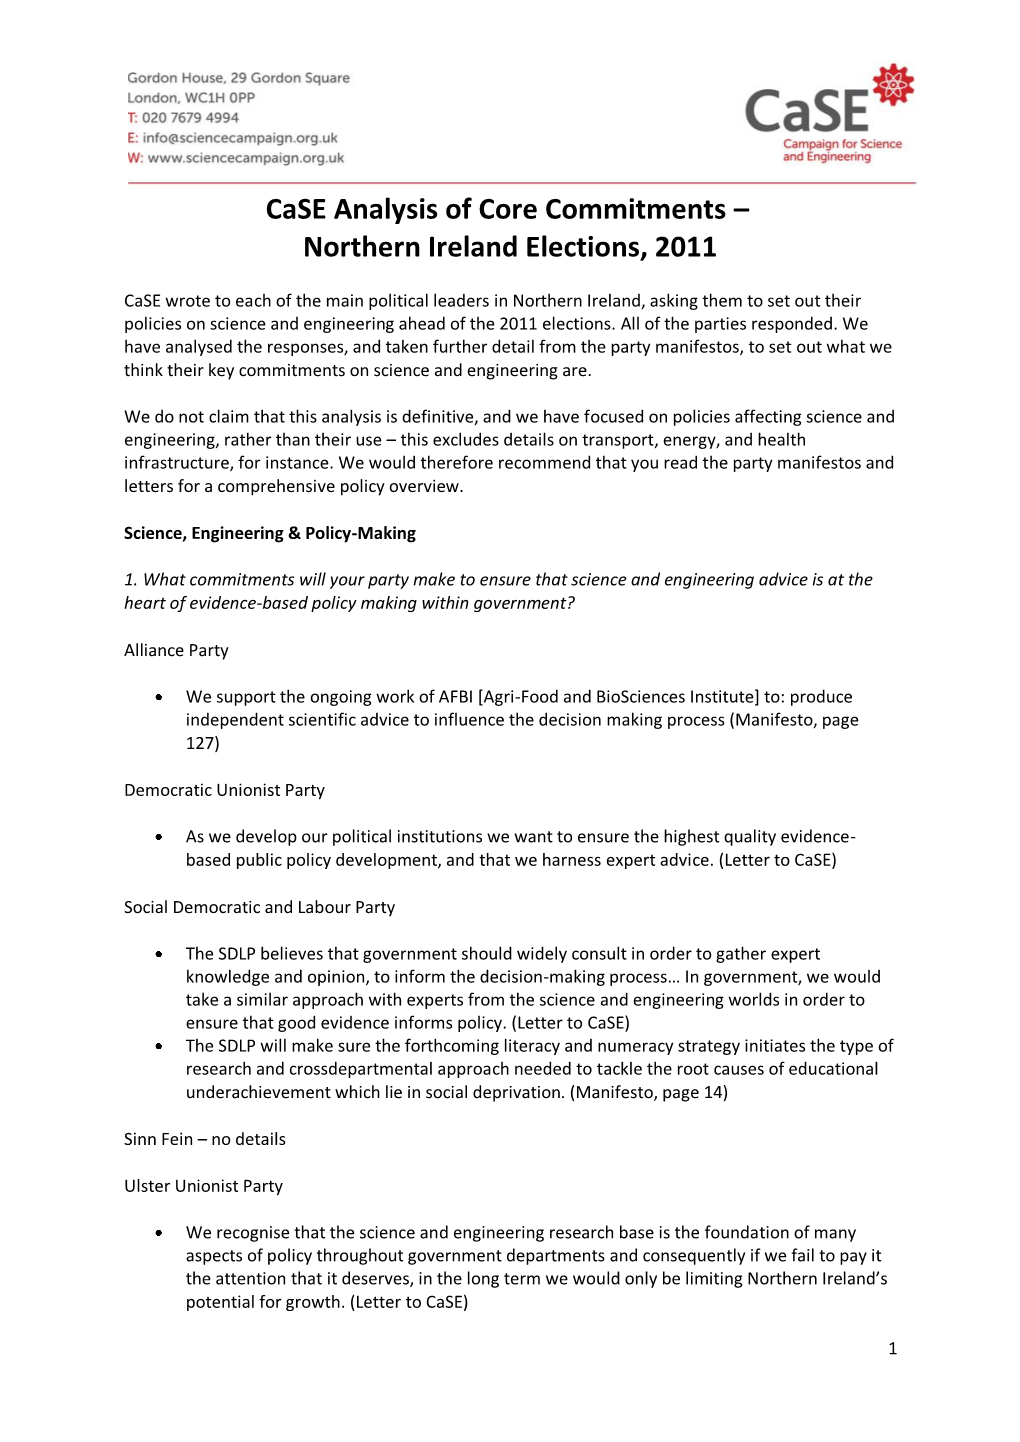 Northern Ireland Elections, 2011